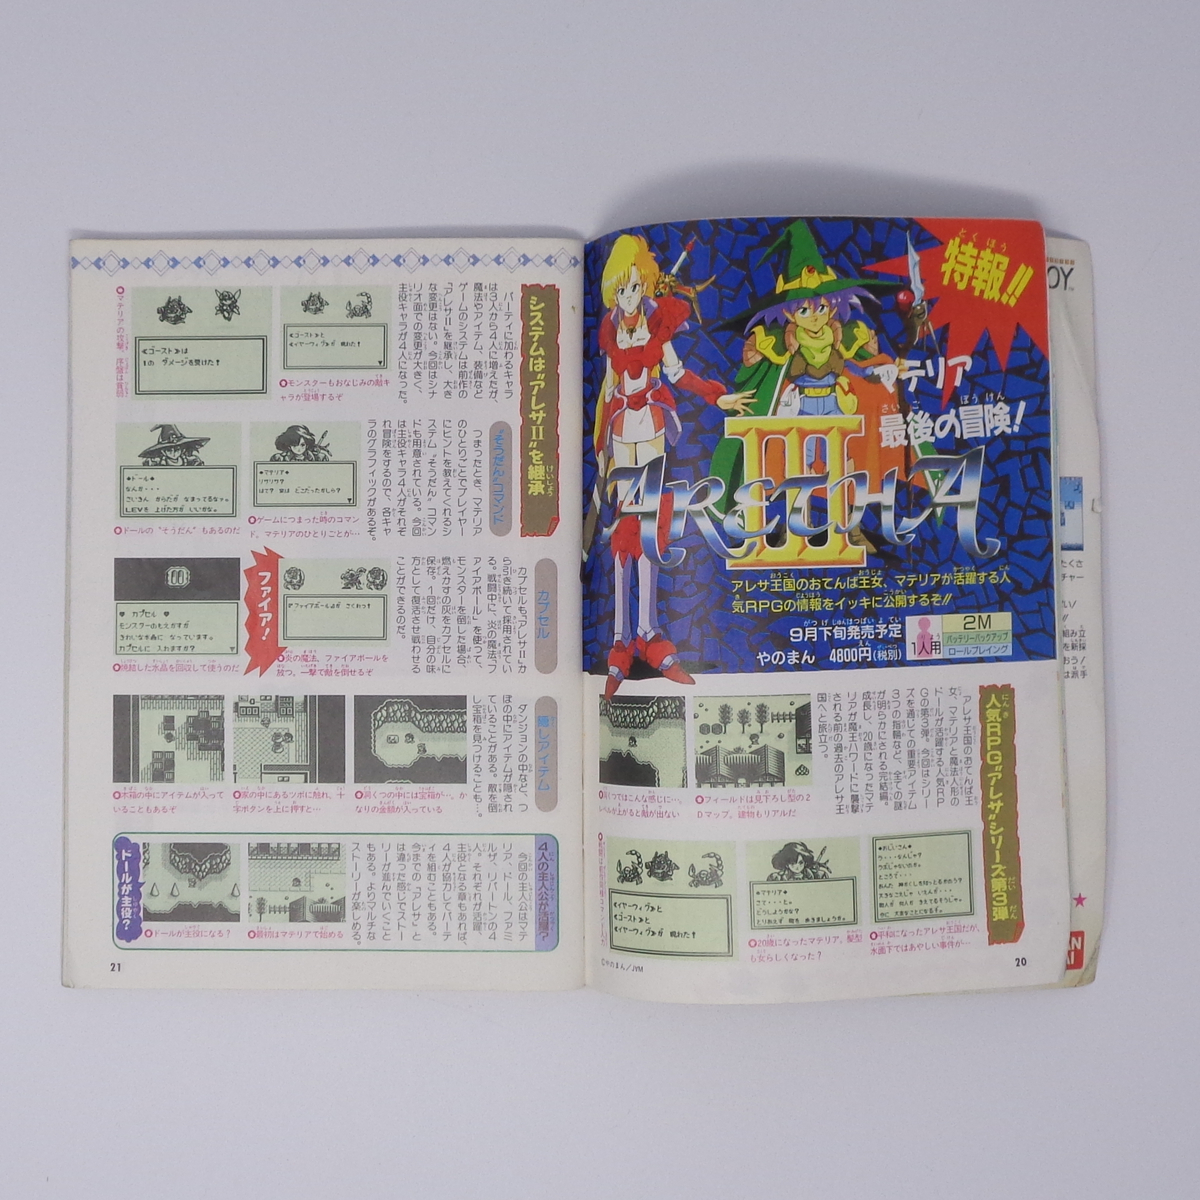 GameBoy Magazine Vol.14 1992年8月6日号 別冊付録無し /X エックス/うる星やつら/ゲームボーイマガジンGB/ゲーム雑誌[Free Shipping]_画像9